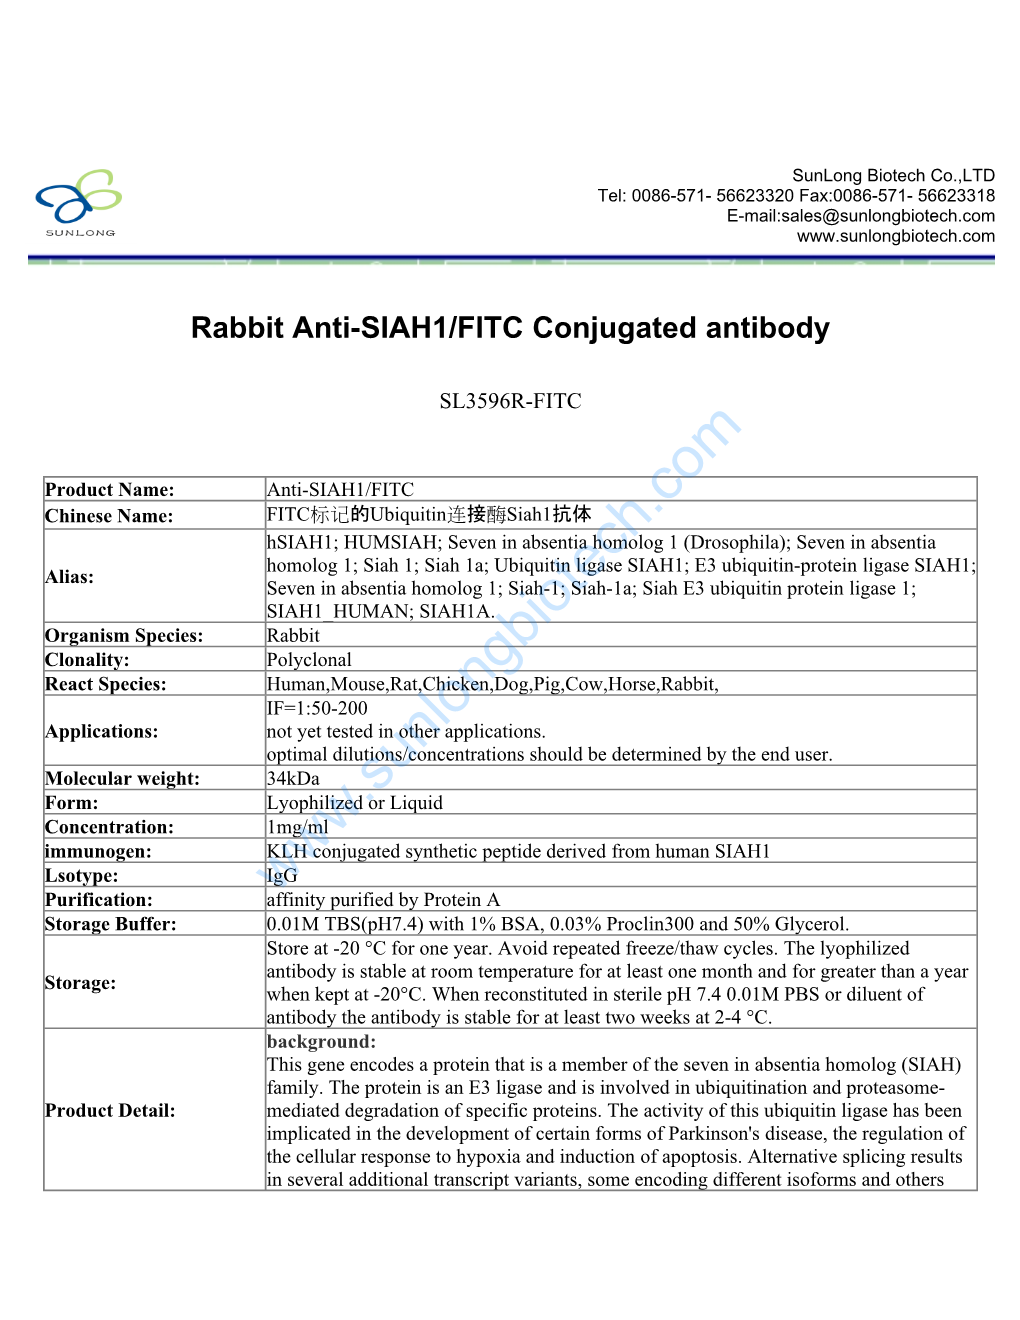 Rabbit Anti-SIAH1/FITC Conjugated Antibody-SL3596R-FITC